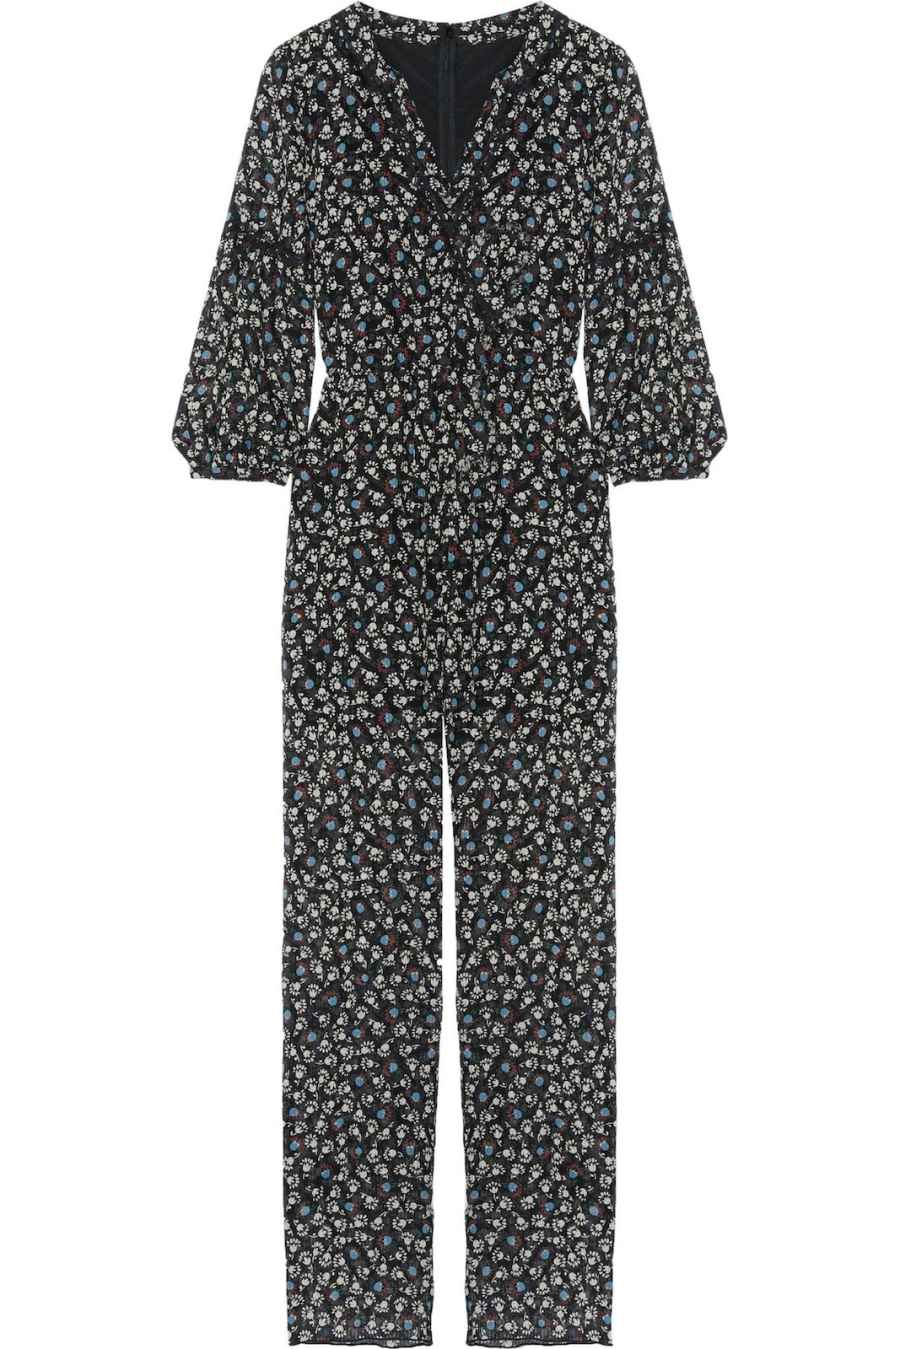 Anna Sui Lace-trimmed Floral-Print Silk-Chiffon Jumpsuit